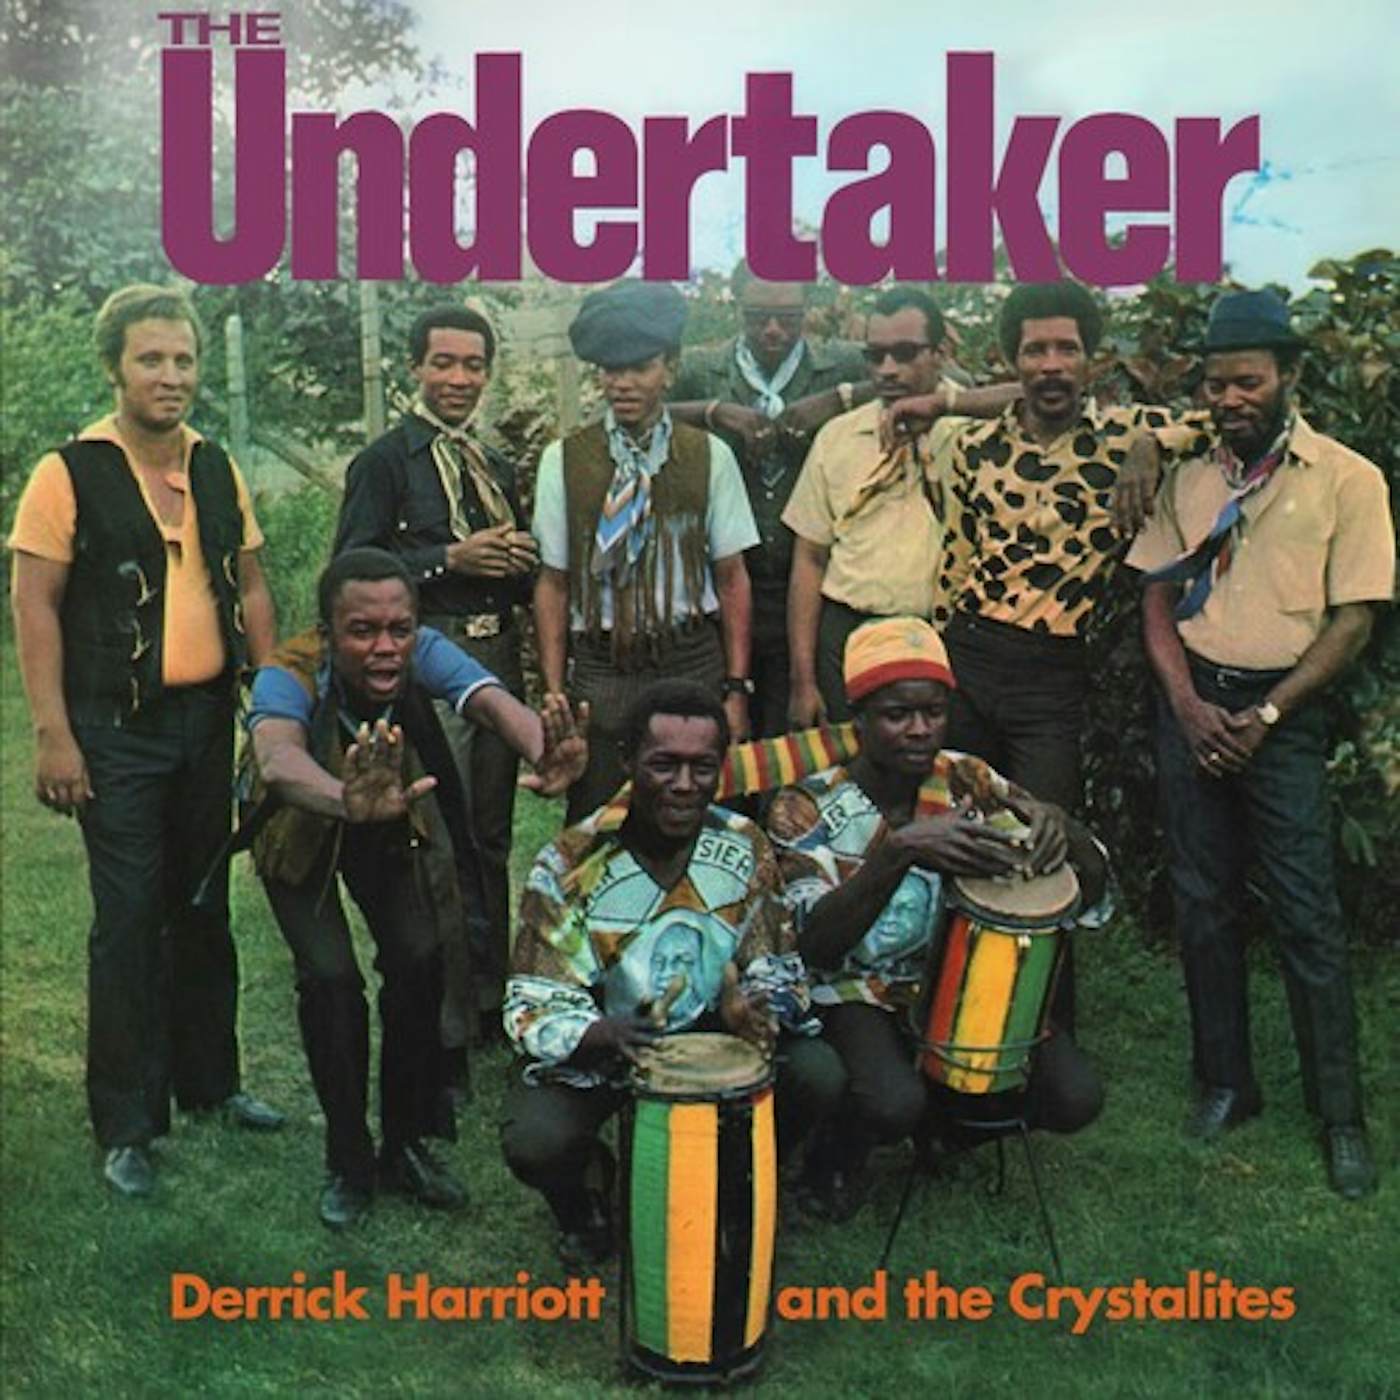 Derrick Harriott & The Crystalites UNDERTAKER CD